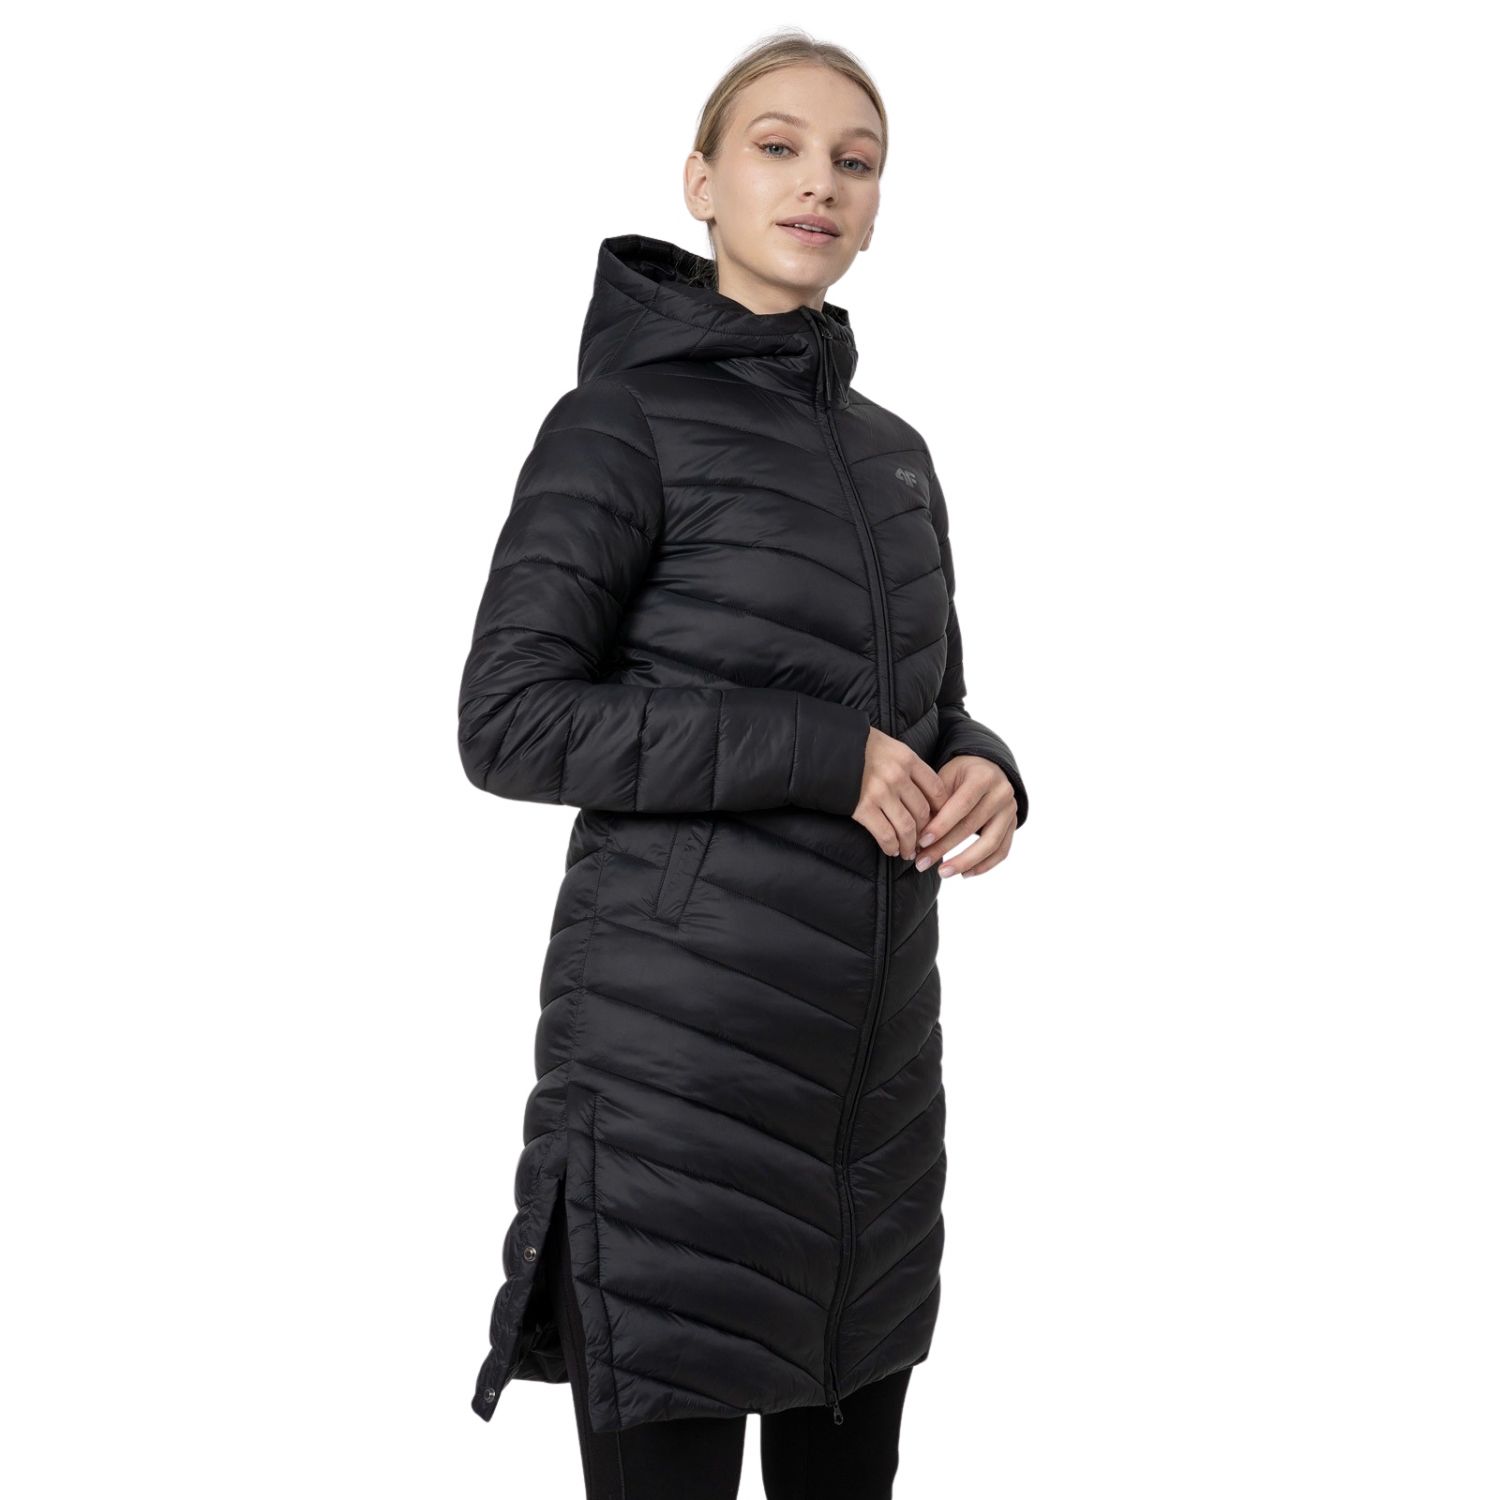 4F Josy, insulated coat, women, deep black